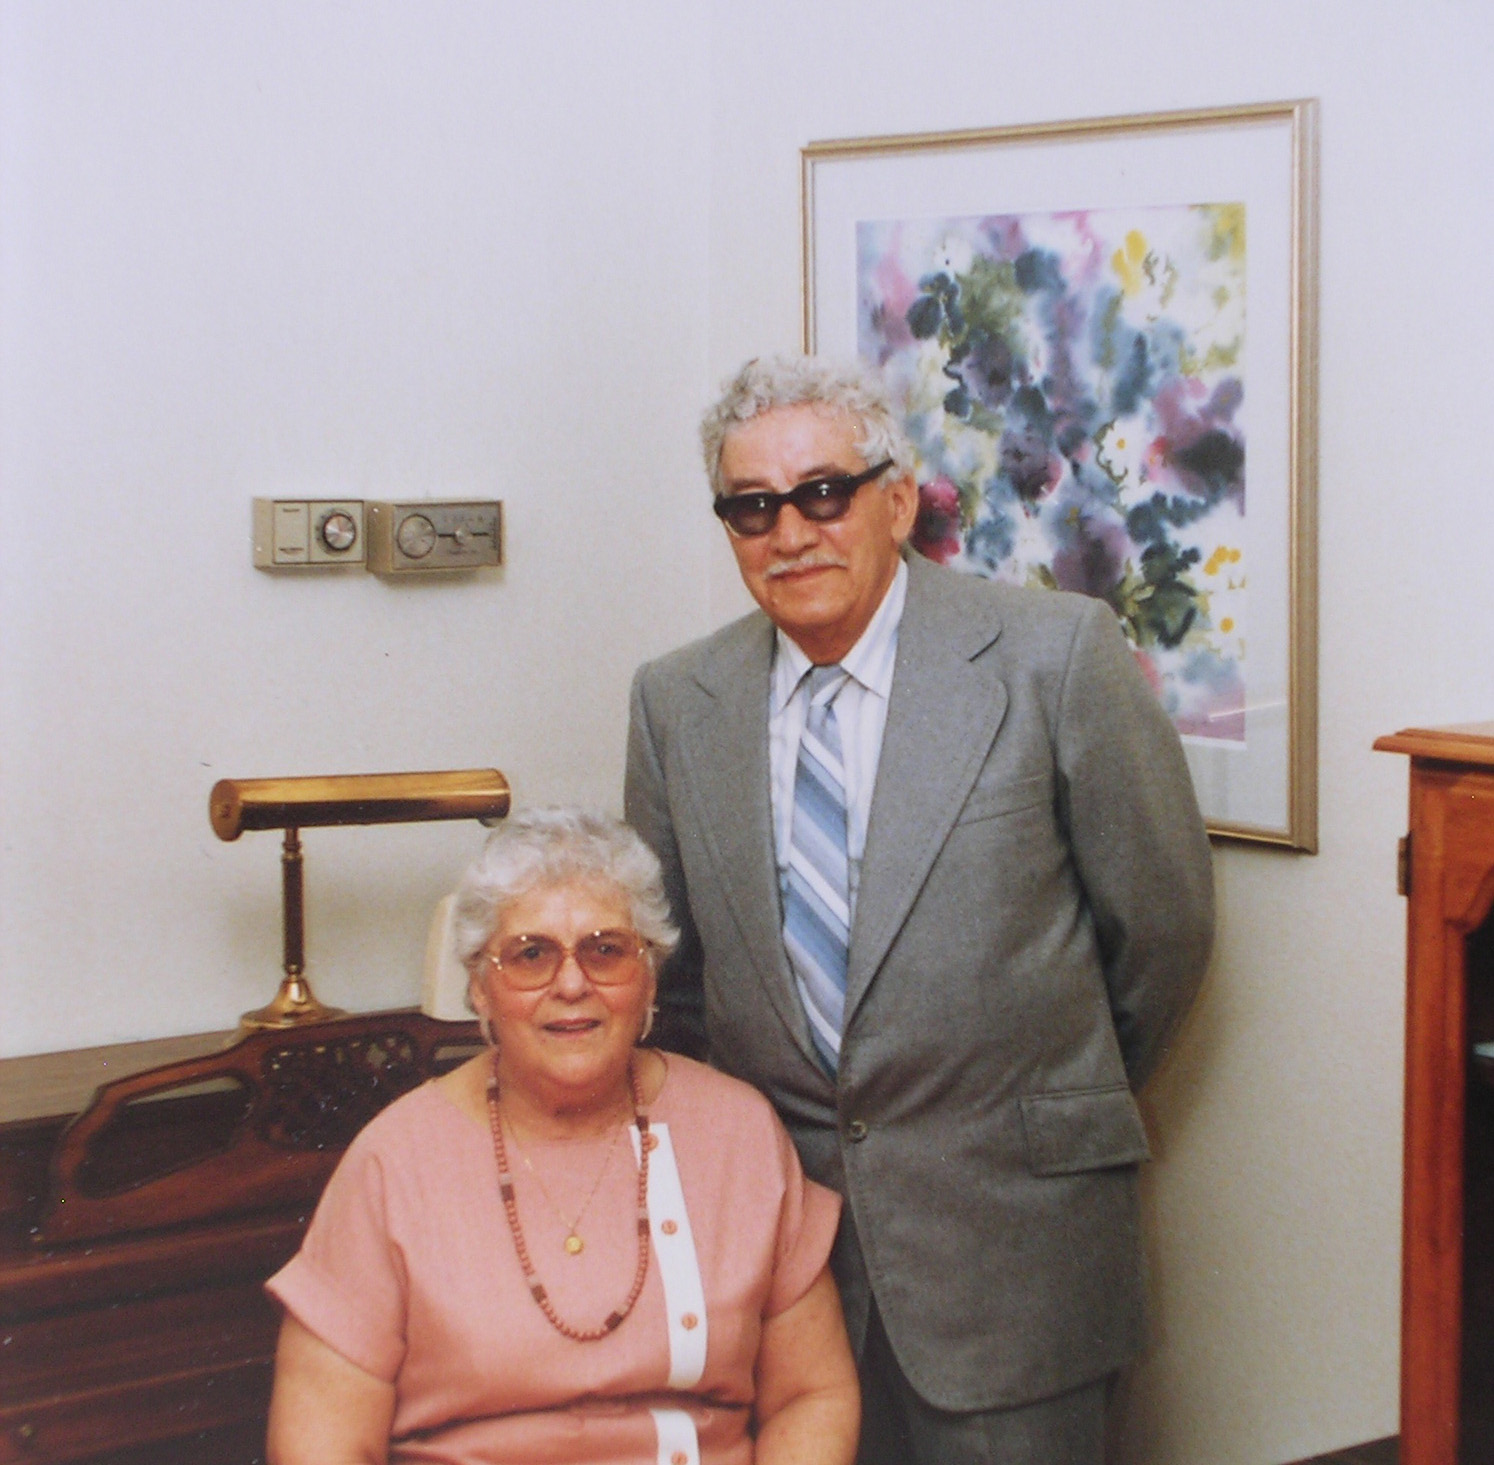 Eva Vienneau and her husband, Sherman LeBlanc